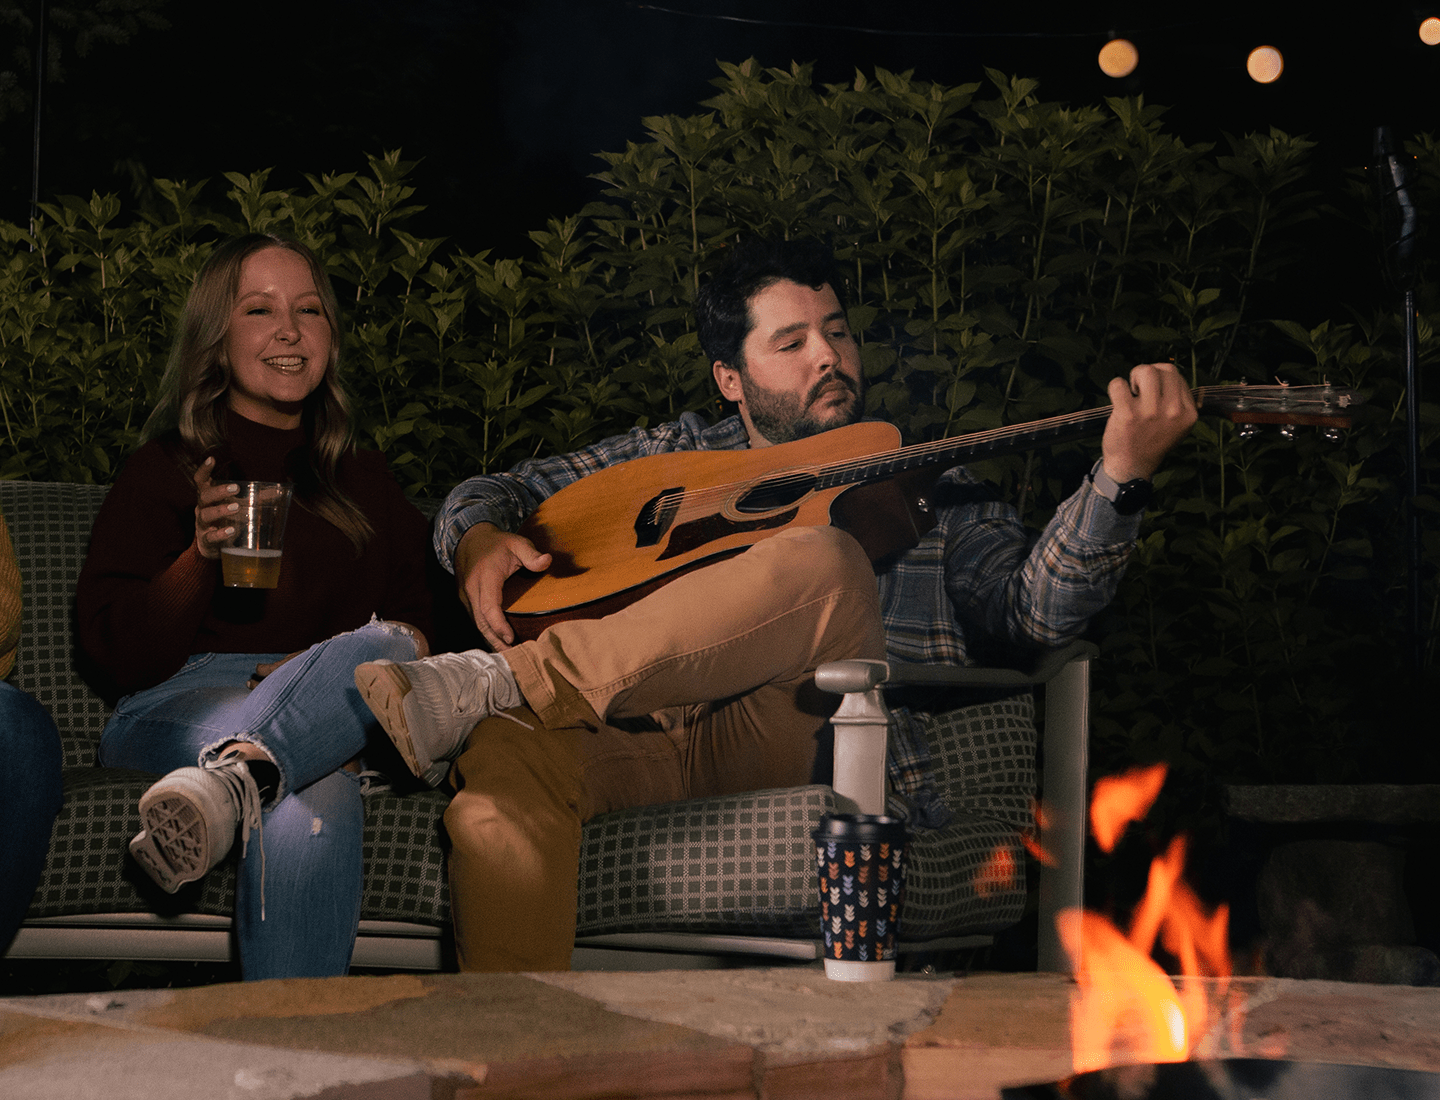 Man playing a guitar sitting next to a woman infront bonfire